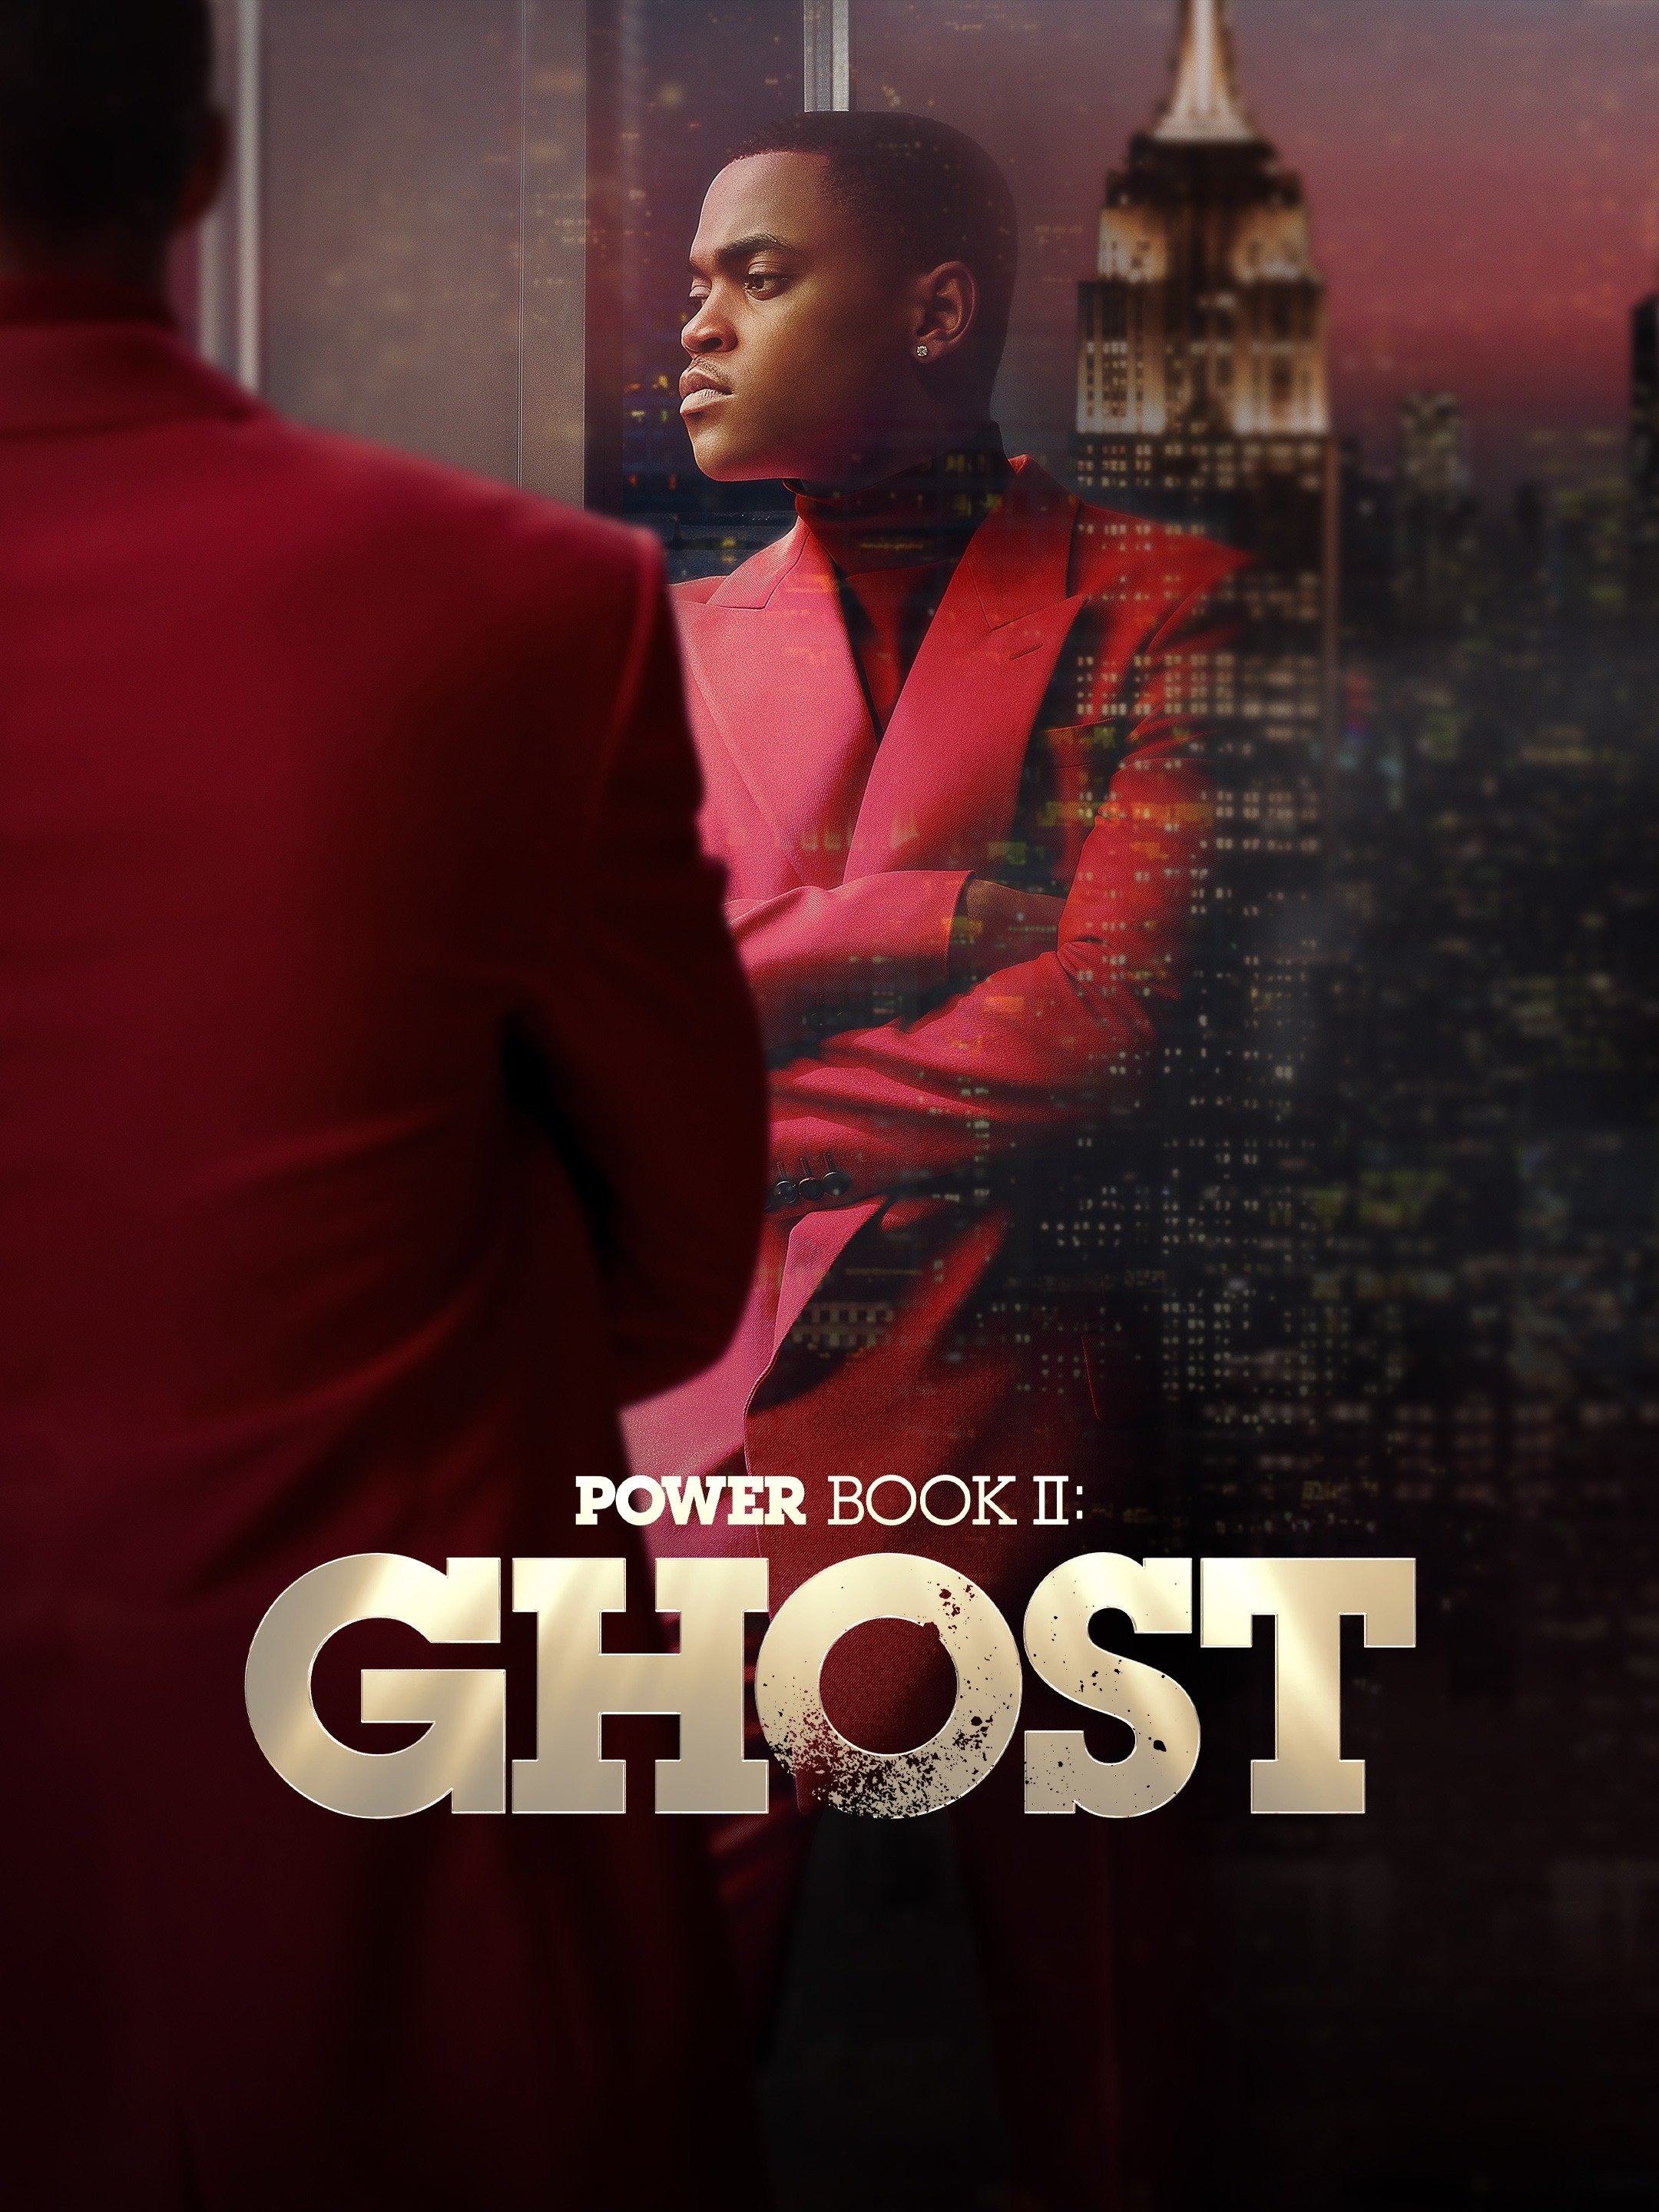 power book 2 ghost season 4 casting call